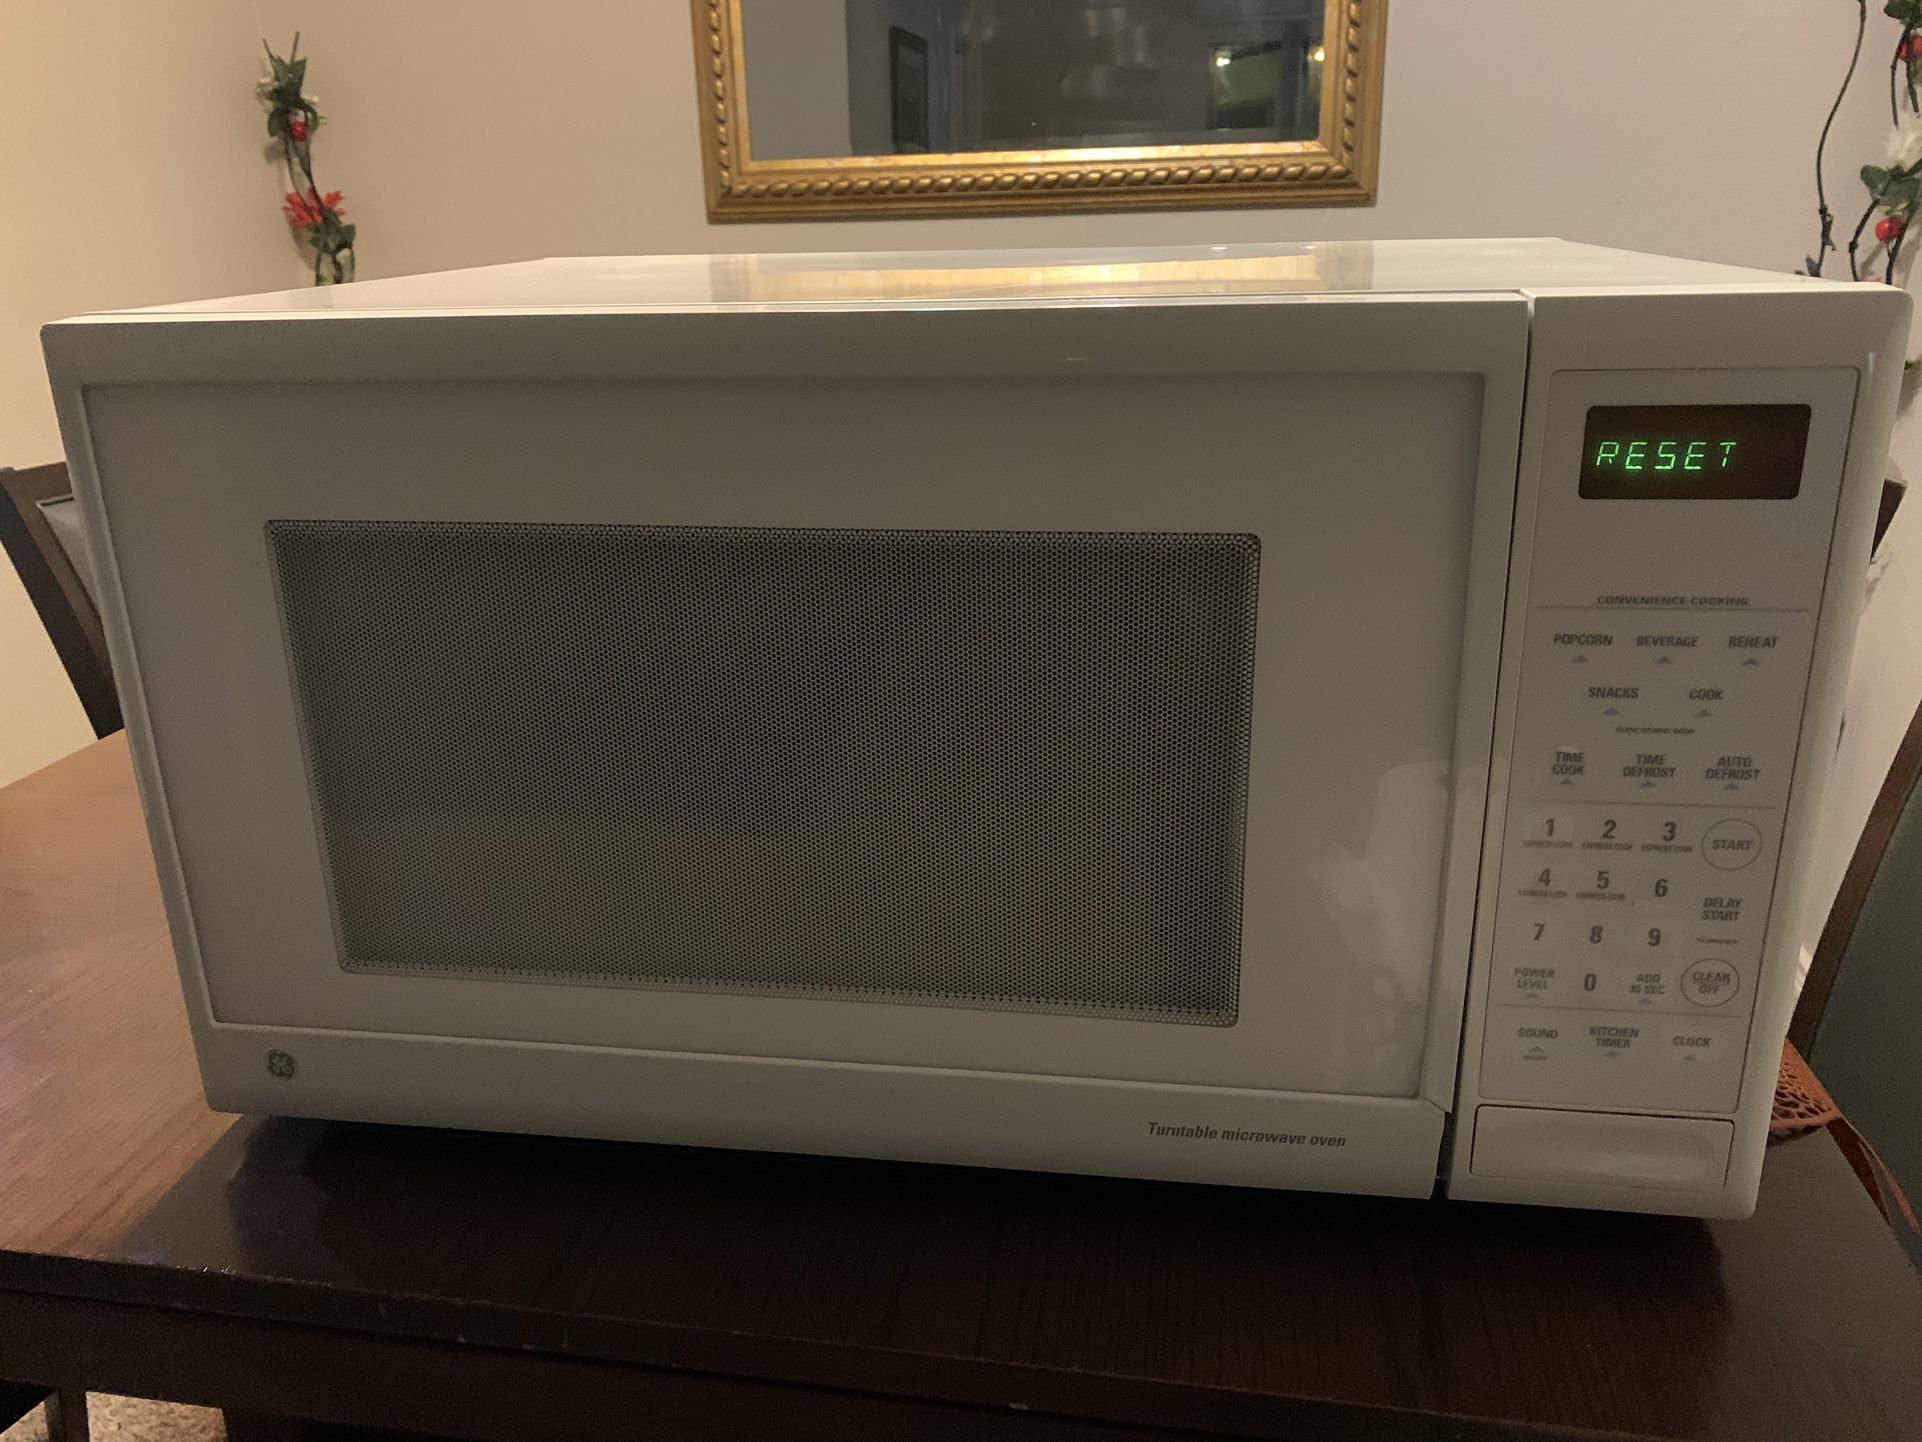 Big Microwave